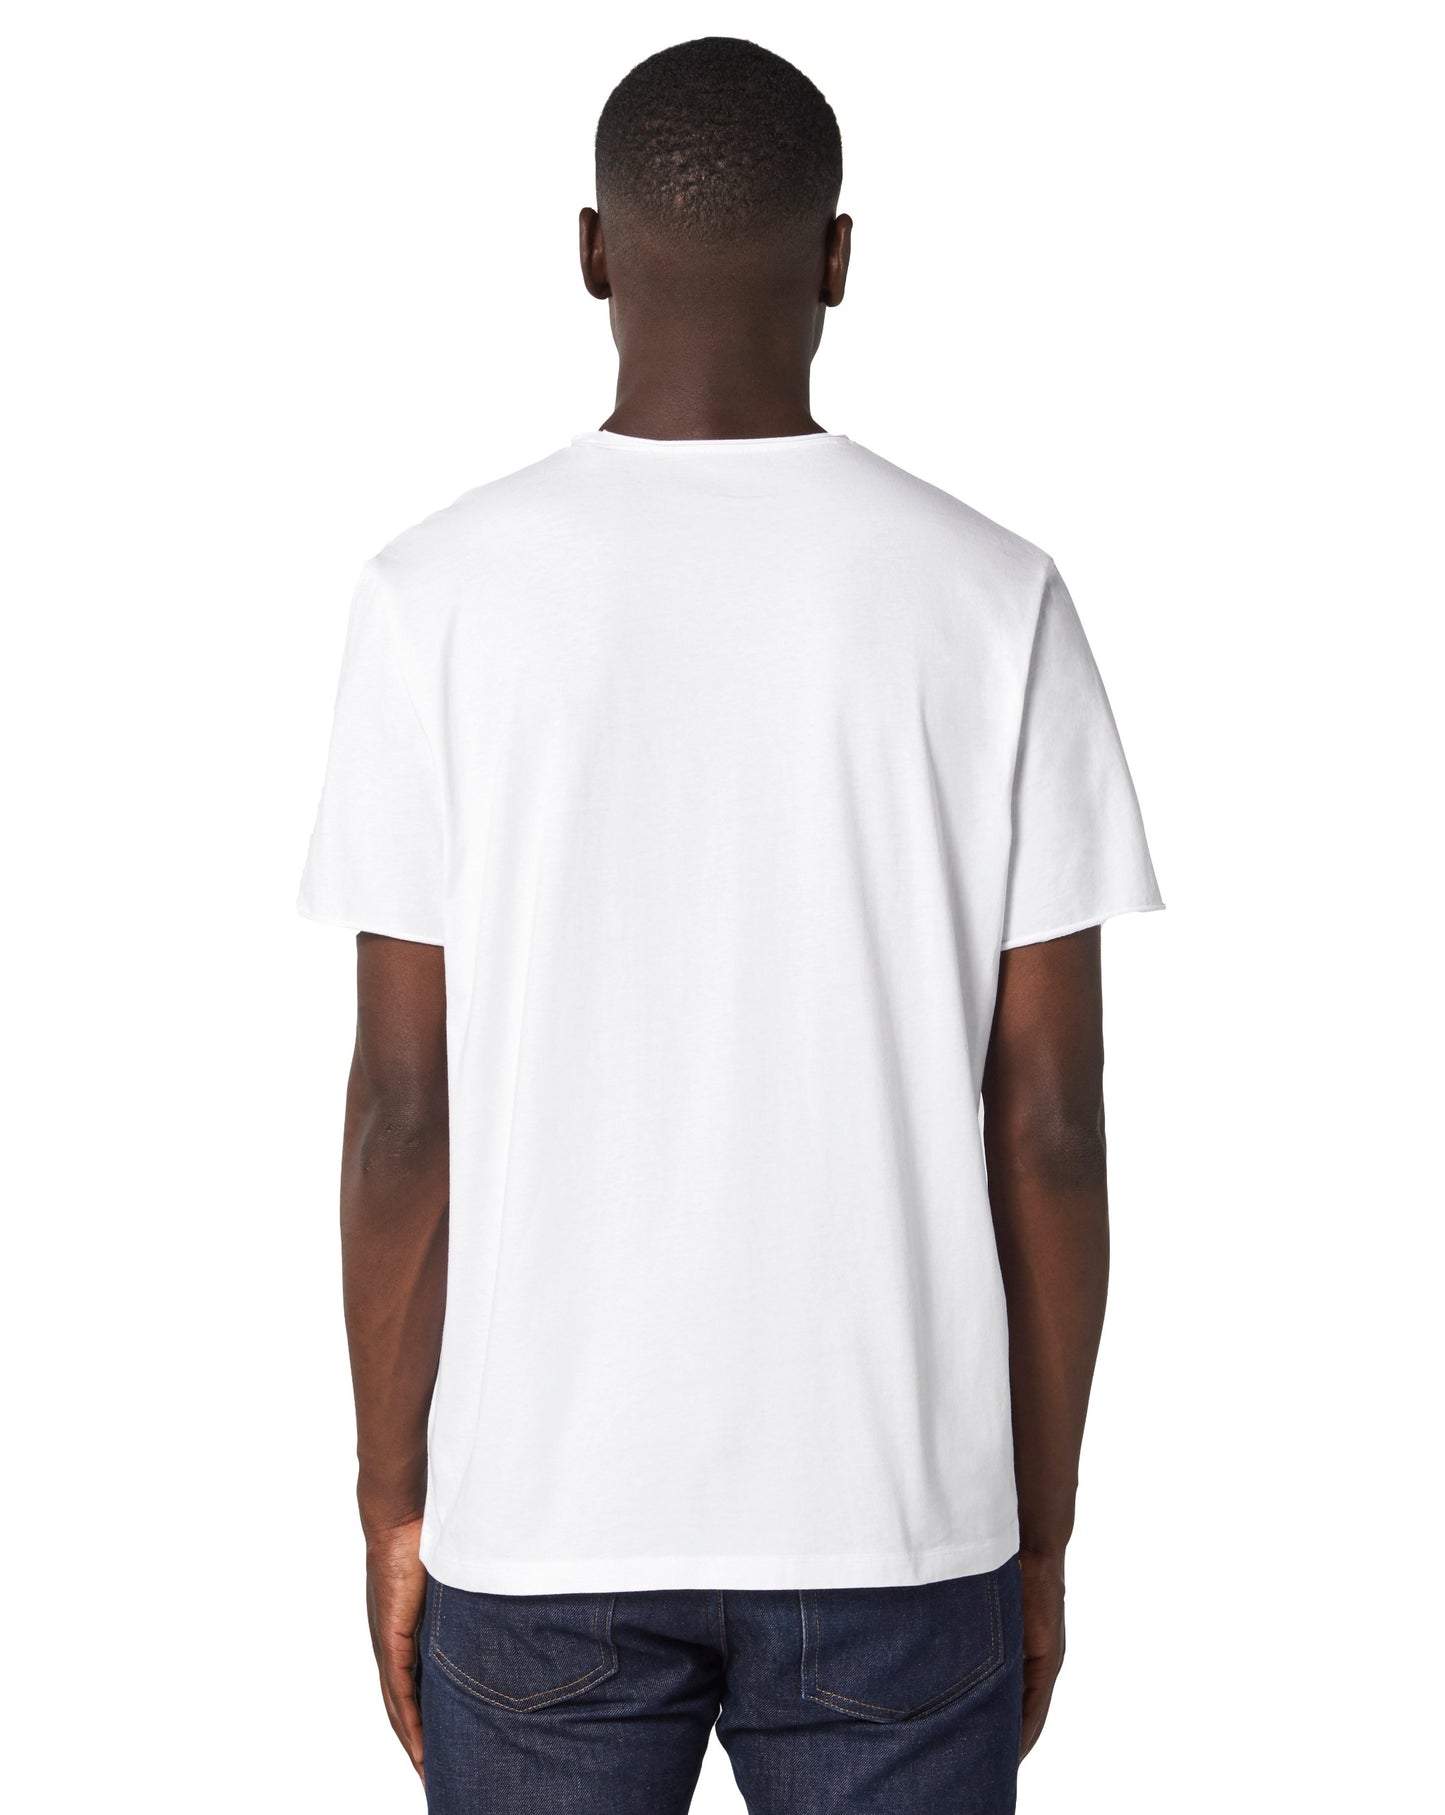 Hang Ten Raw Surfer T-shirt - White